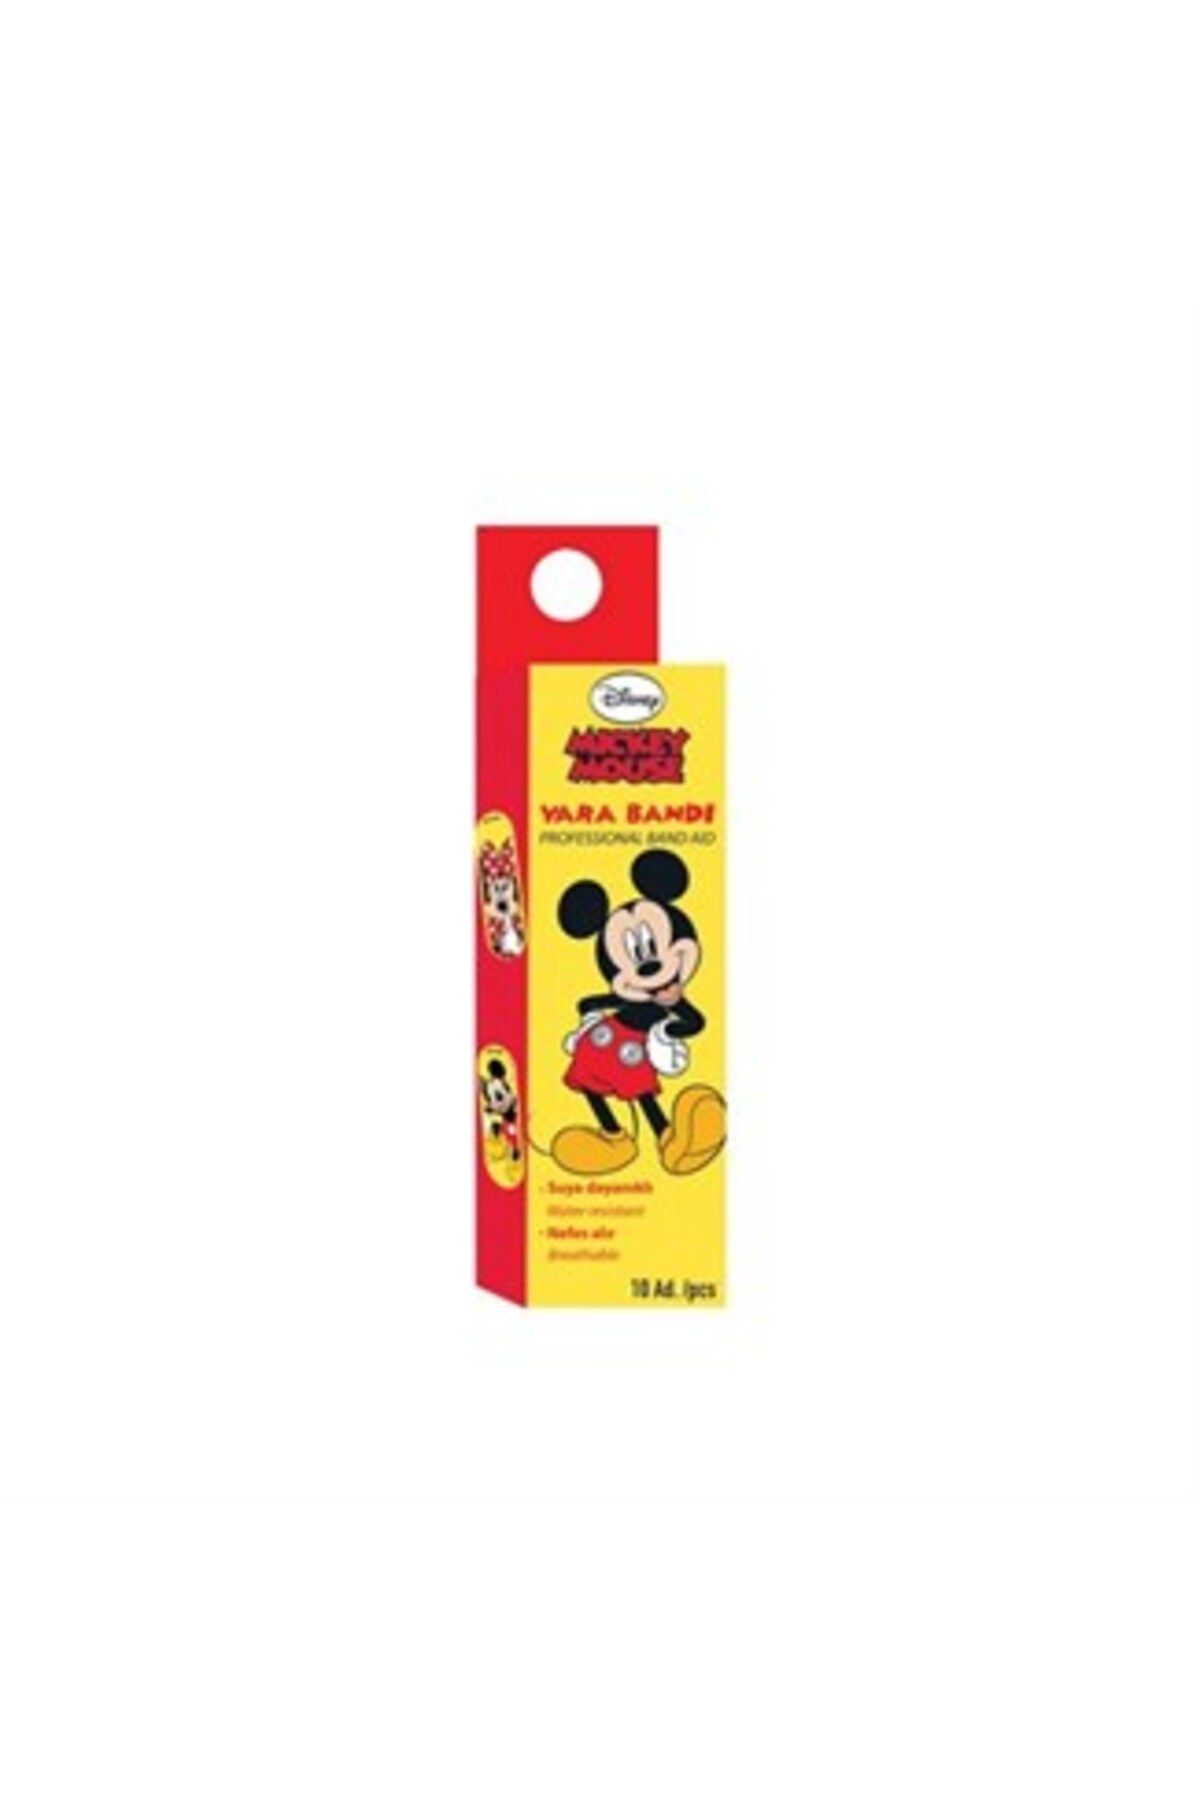 MARVEL Mickey Mouse Çocuk Yara Bandı 10 Adet (SUYA DAYANIKLI)